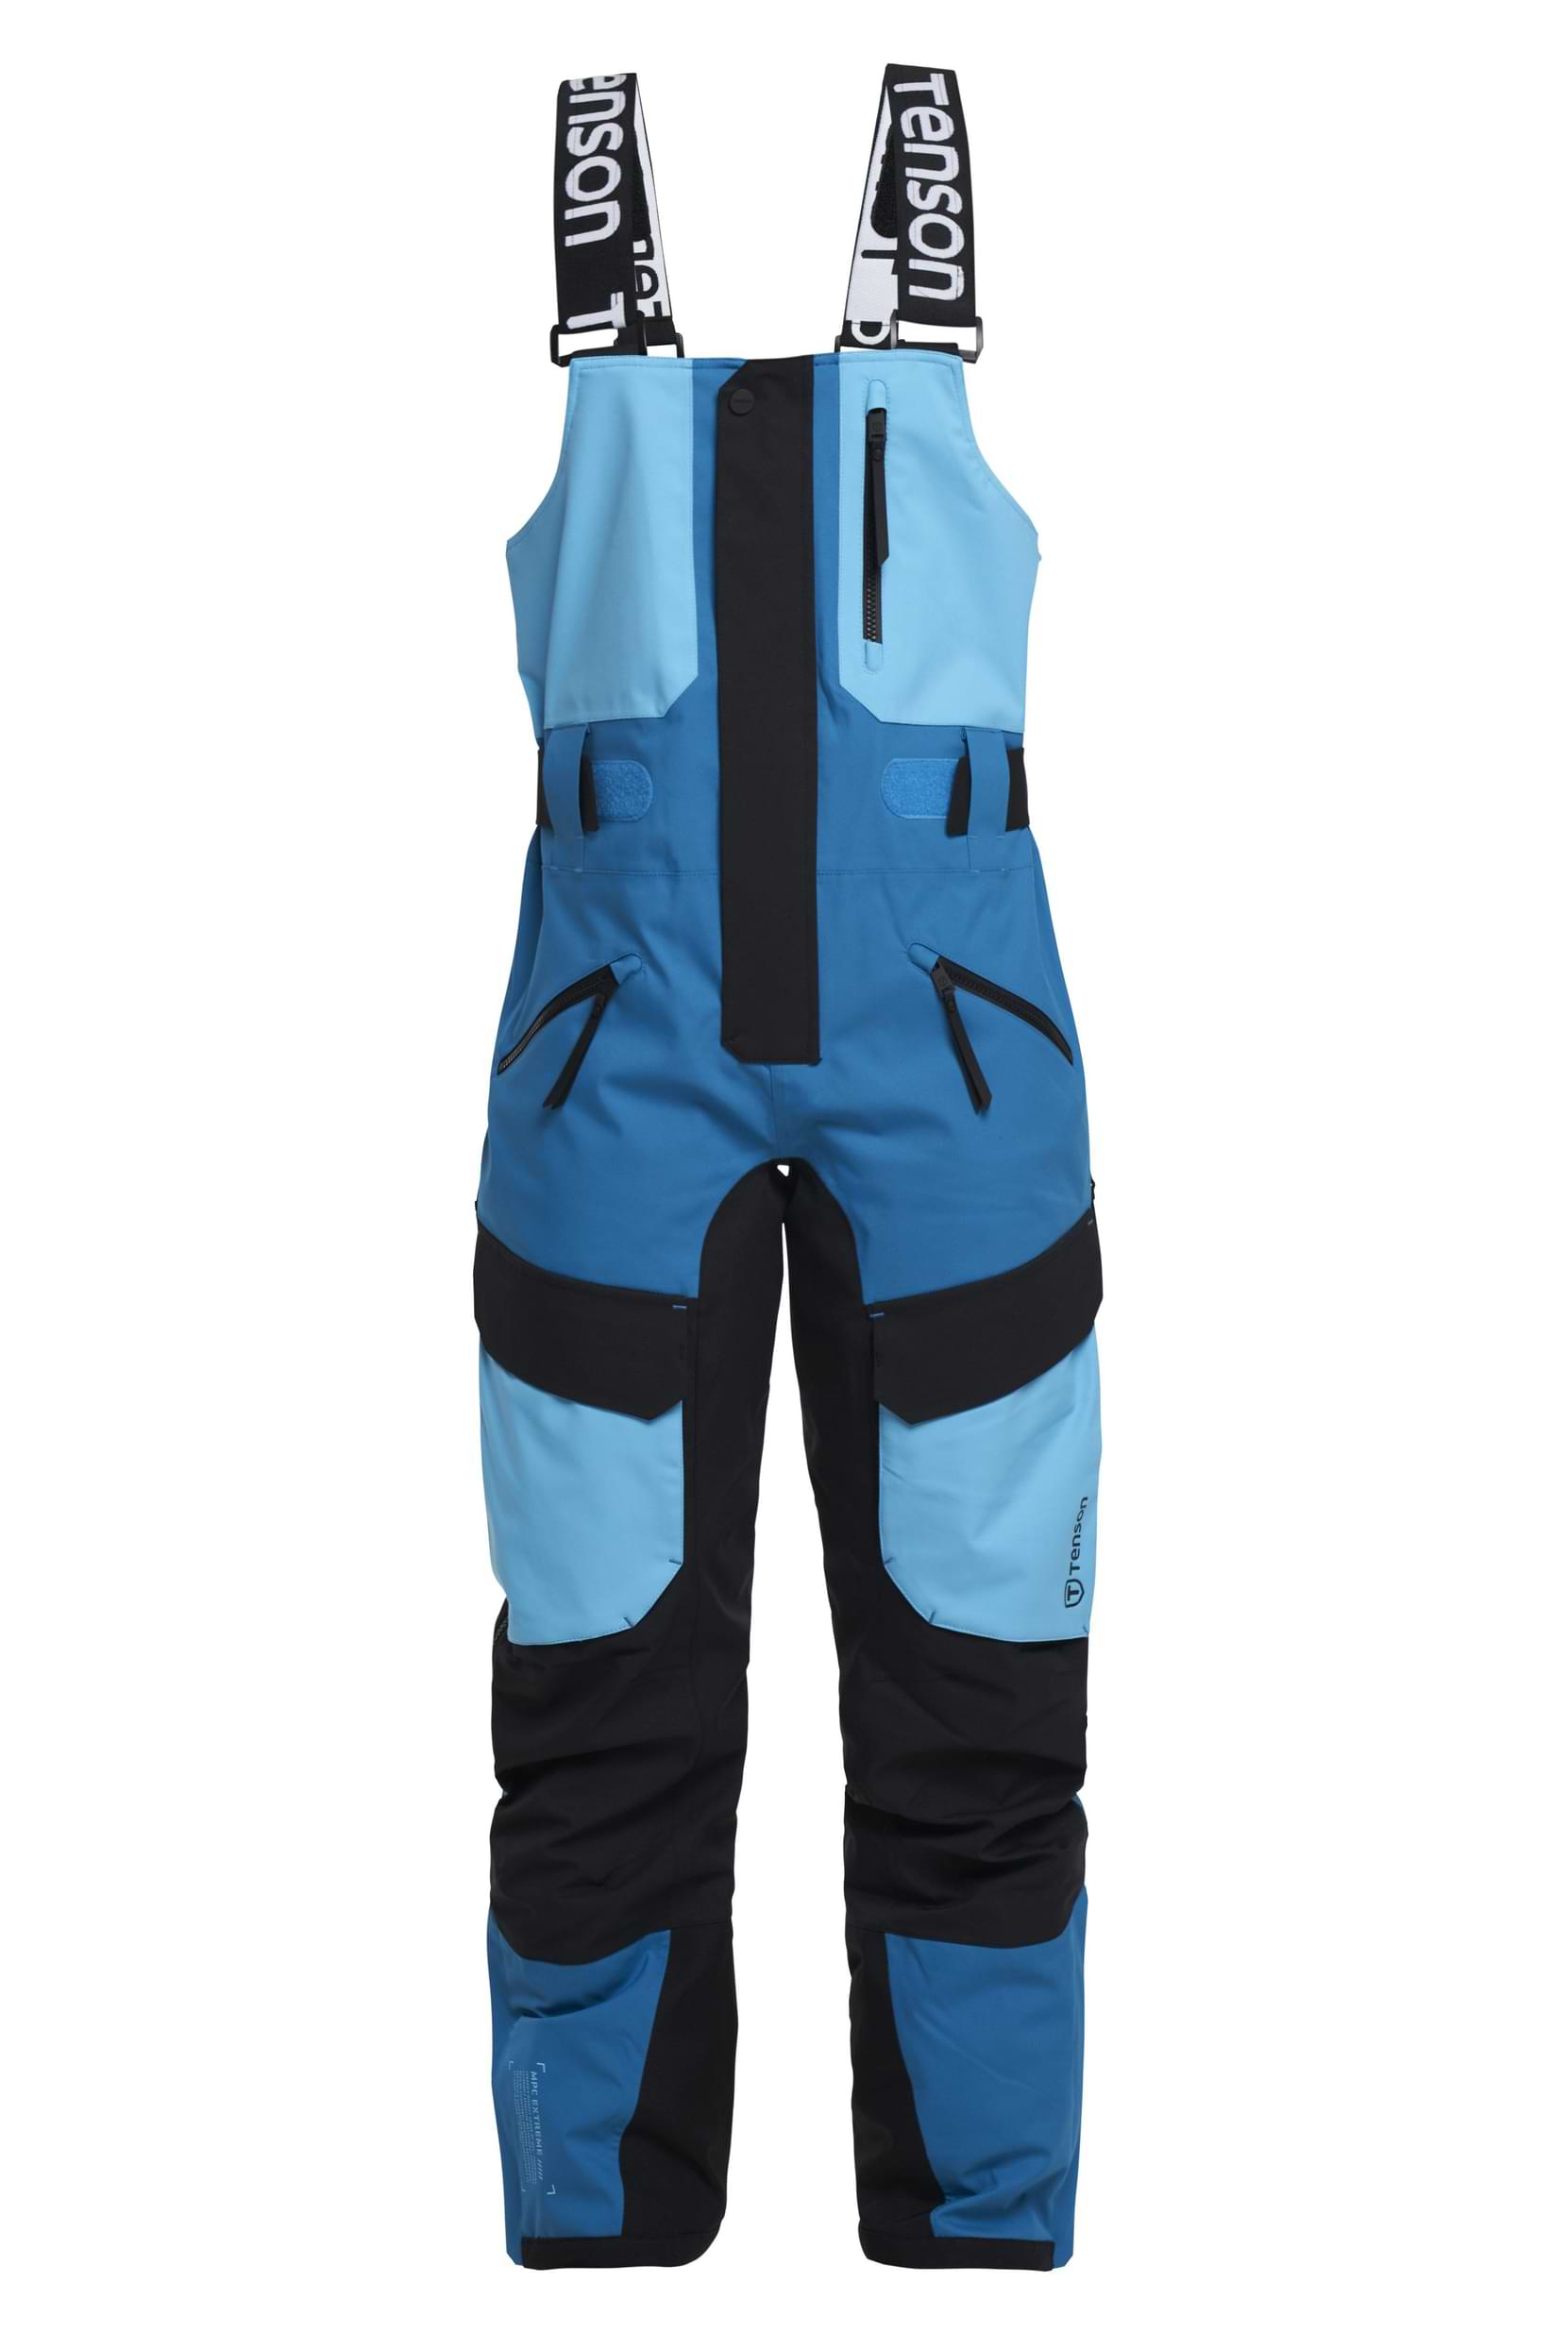 Oakley Factory Suspenders Braces  Ski Pants  Ski Clothing  Ski   Freeride  All